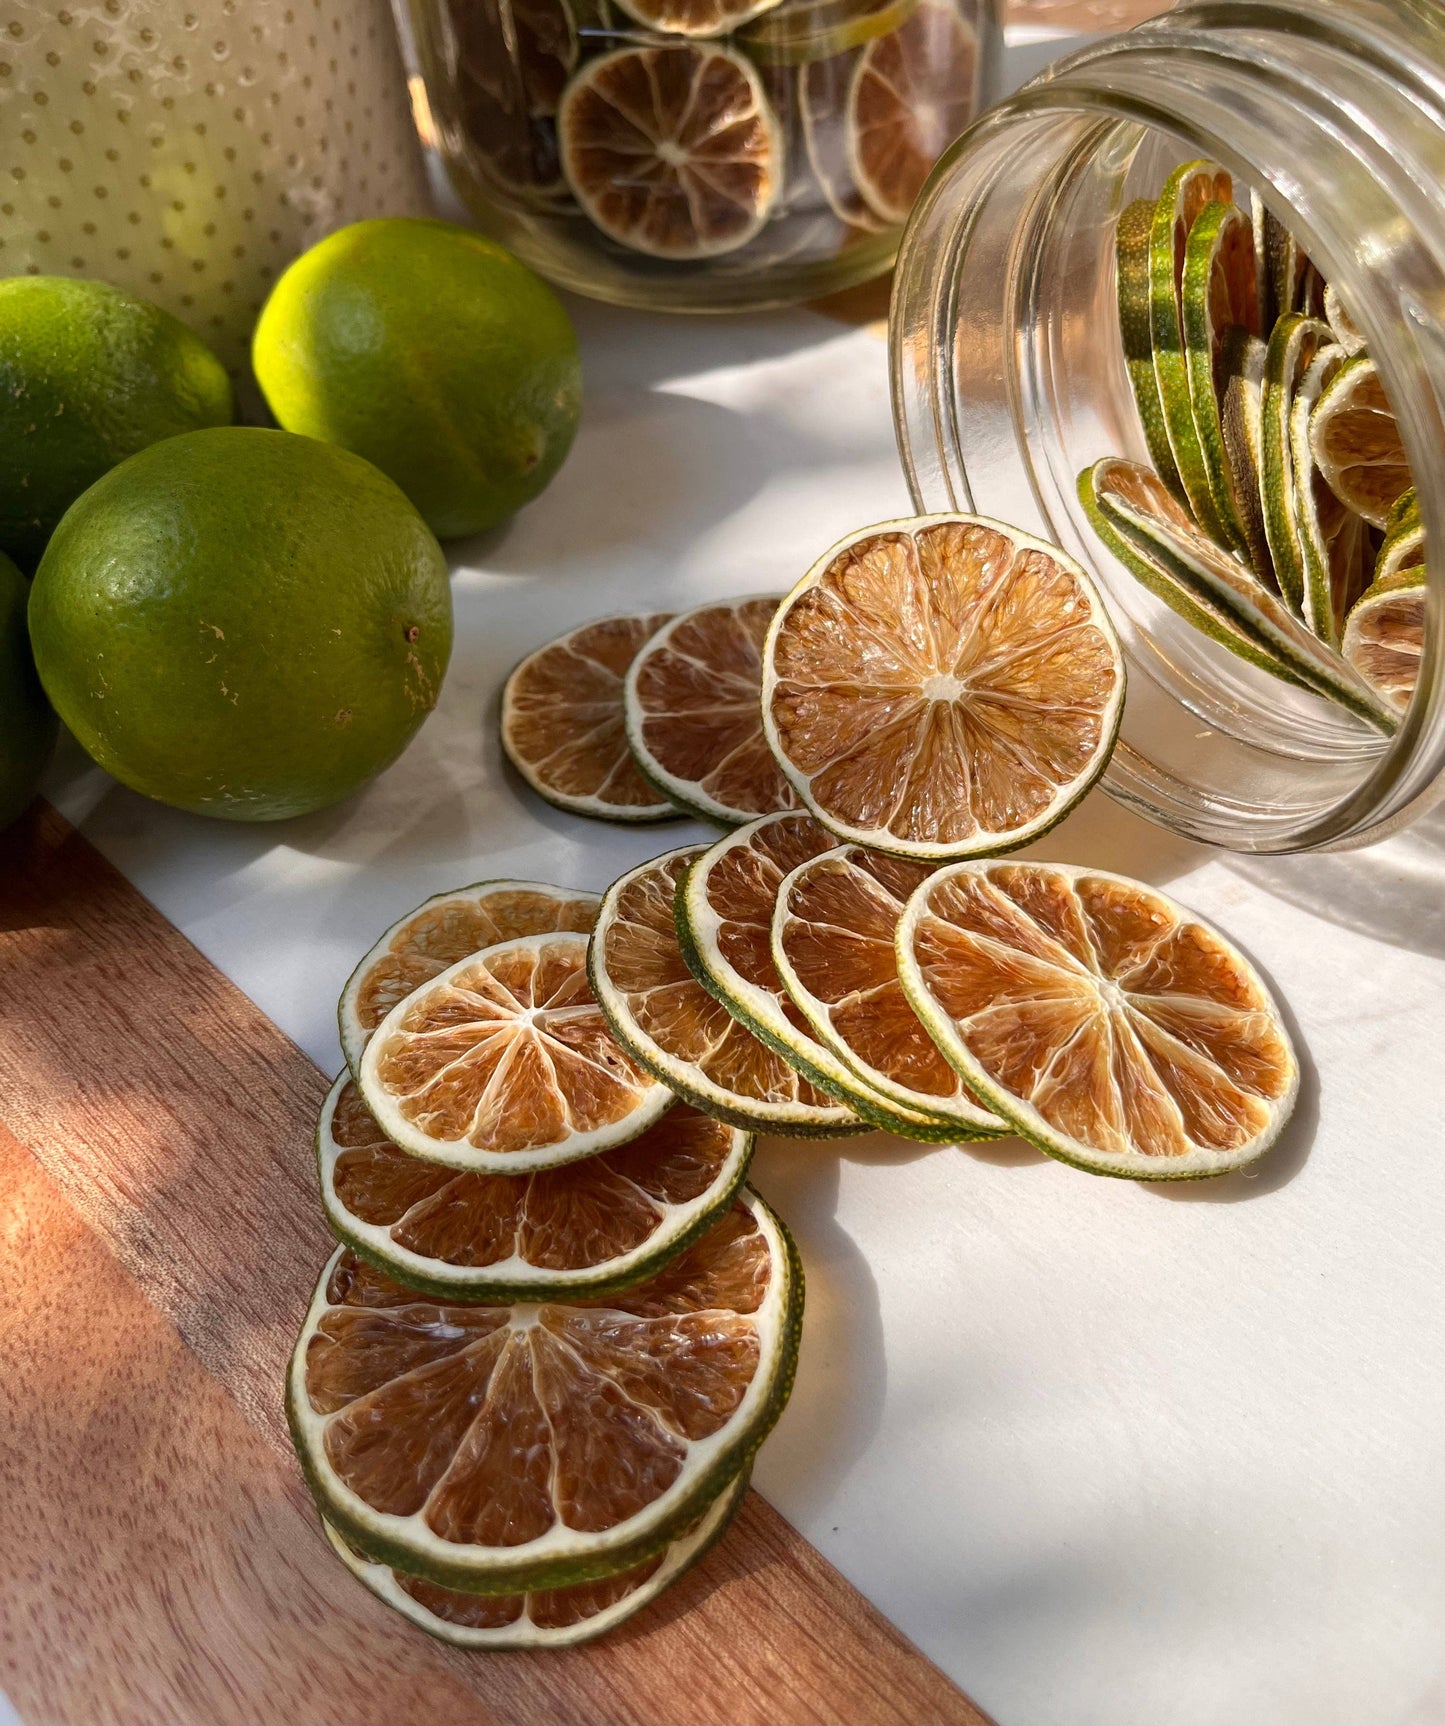 The Perfect Garnish - Limes